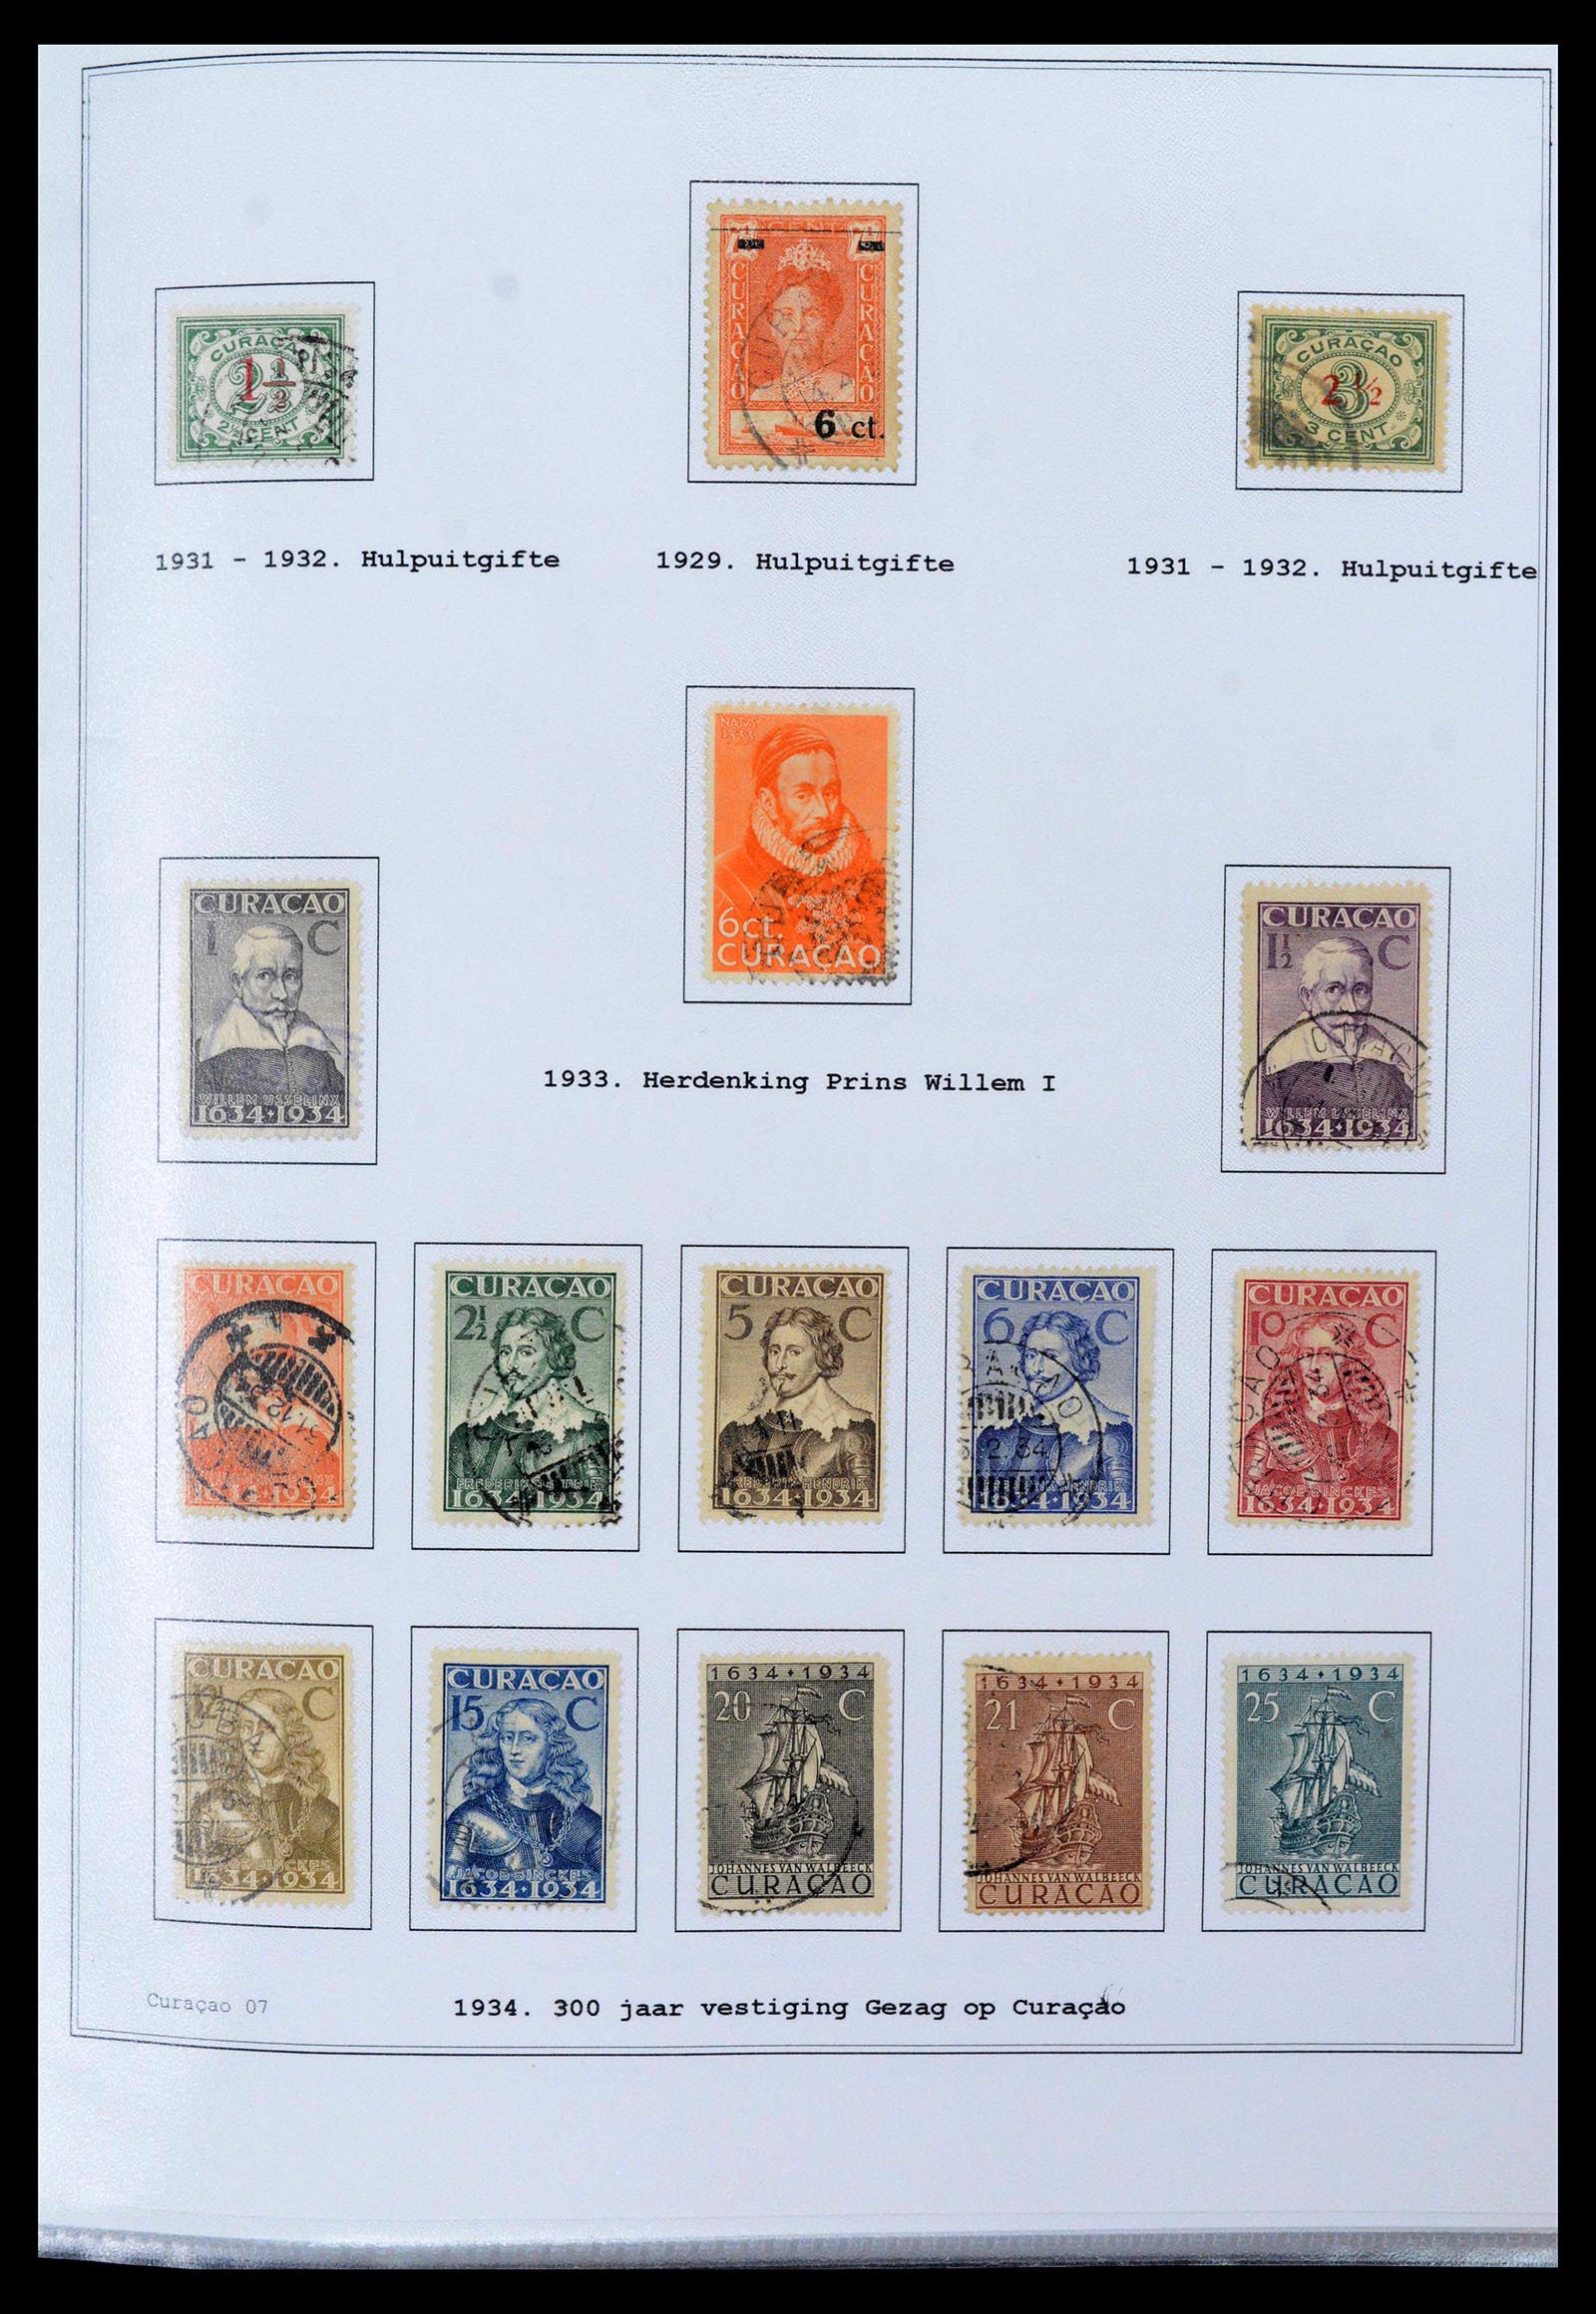 39024 0007 - Stamp collection 39024 Curaçao/Antilles 1873-2006.